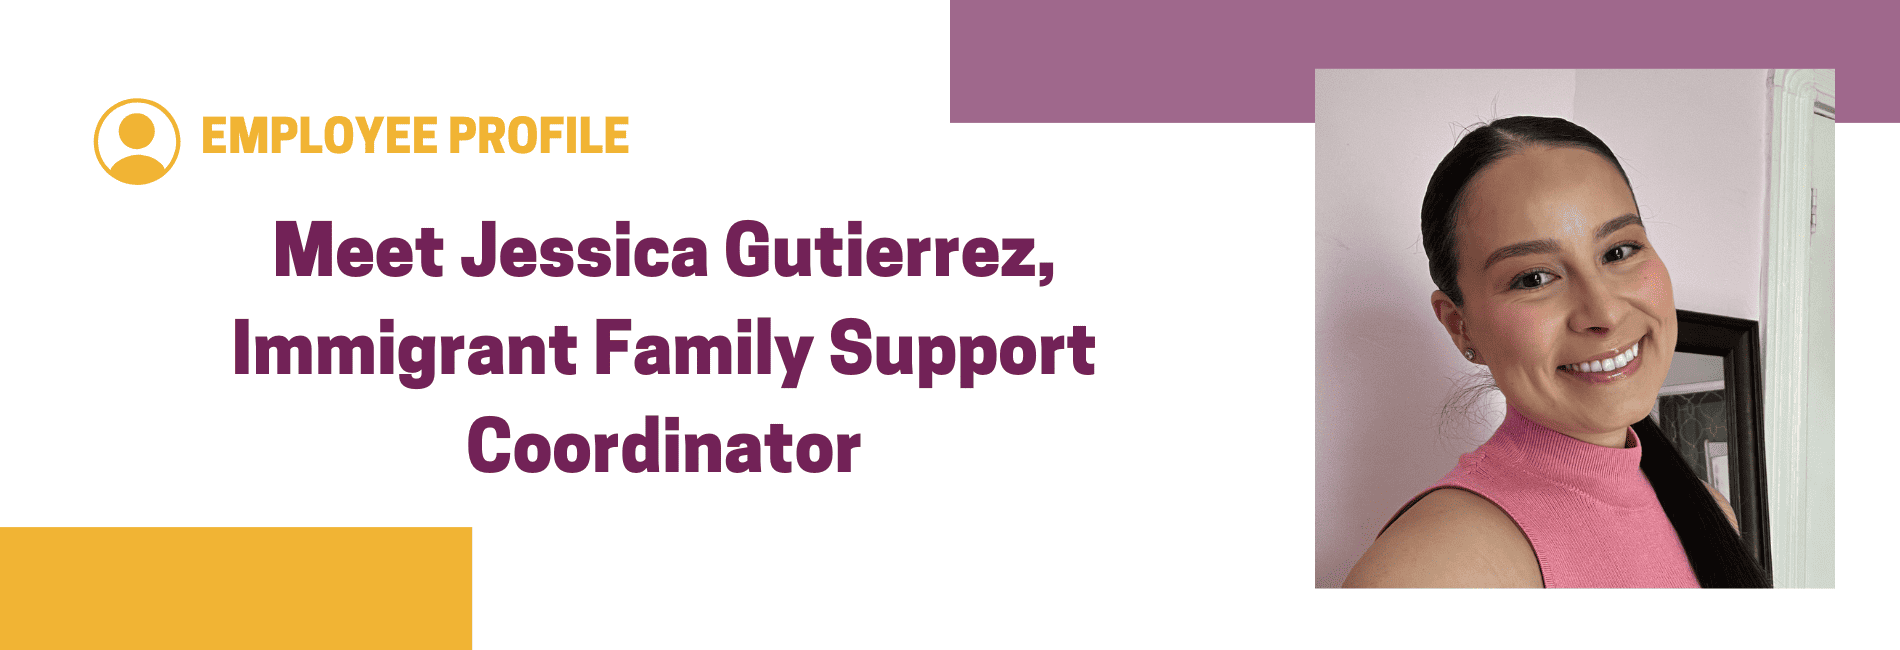 Meet Jessica Gutierrez Blog Post Banner